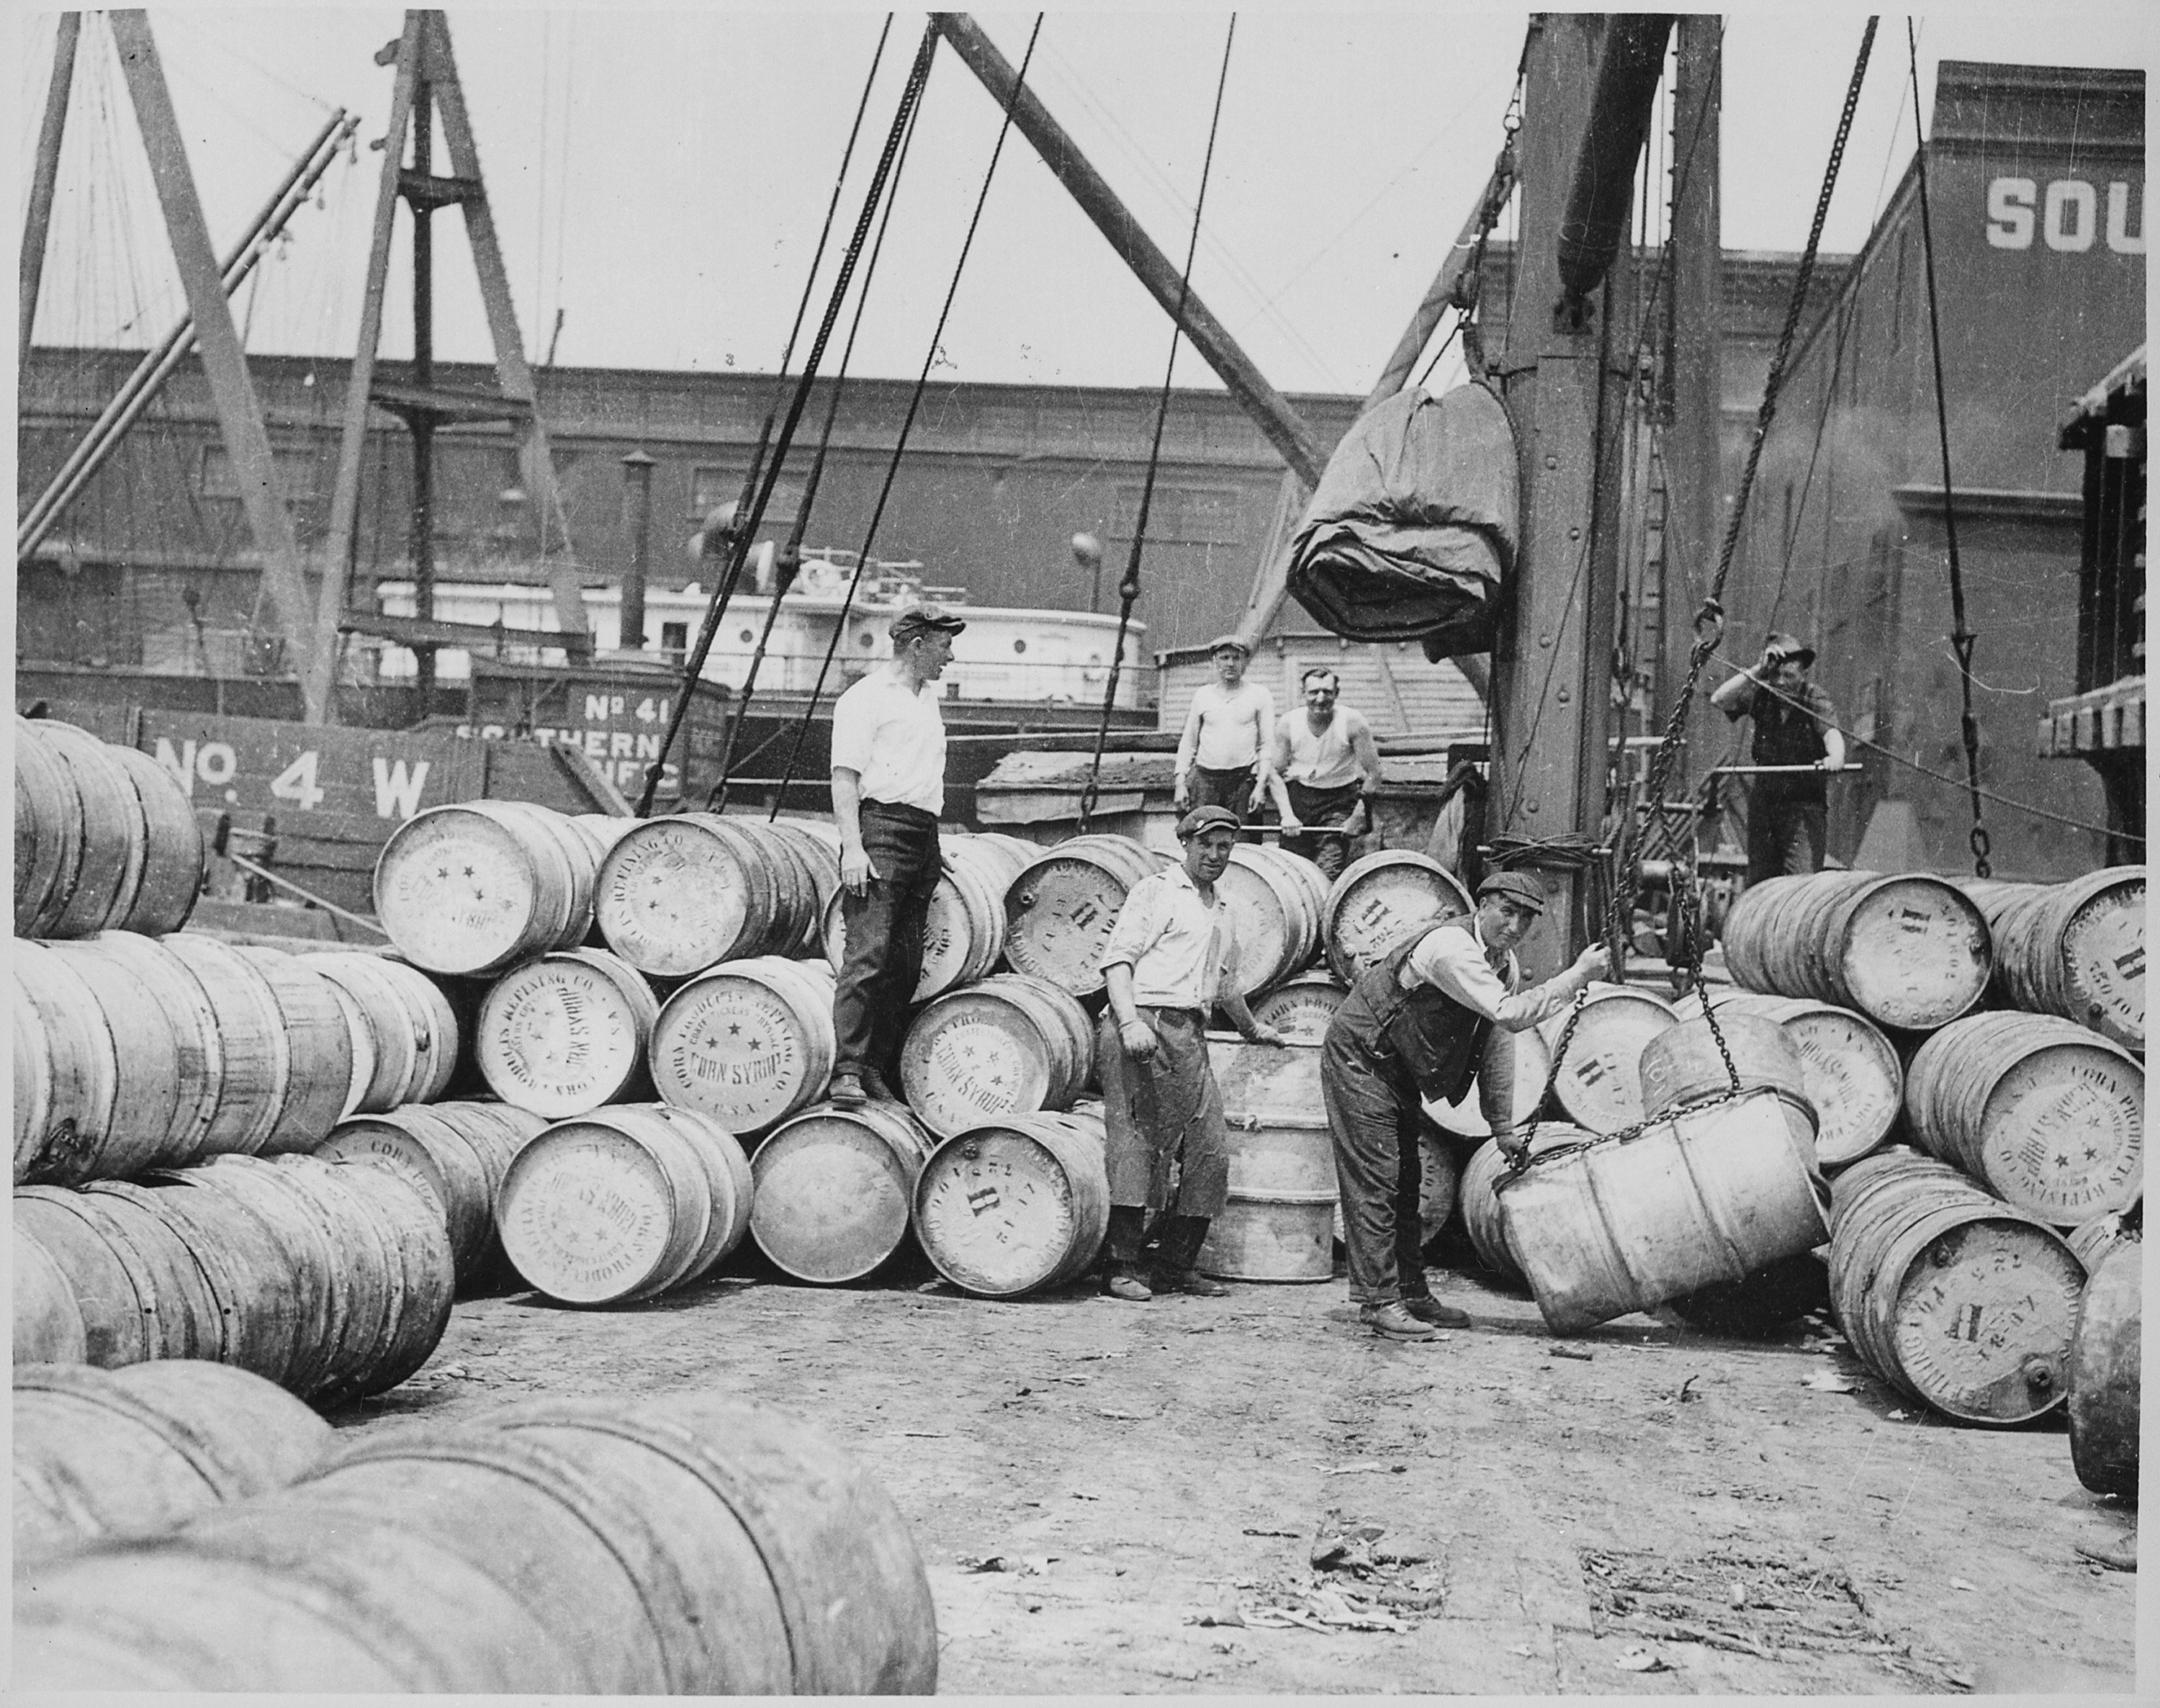 Stevedores on a New York Dock Loading Barrels of Corn Dyrup onto a Barge on the Hudson River, ca. 1912 - NARA - 518287